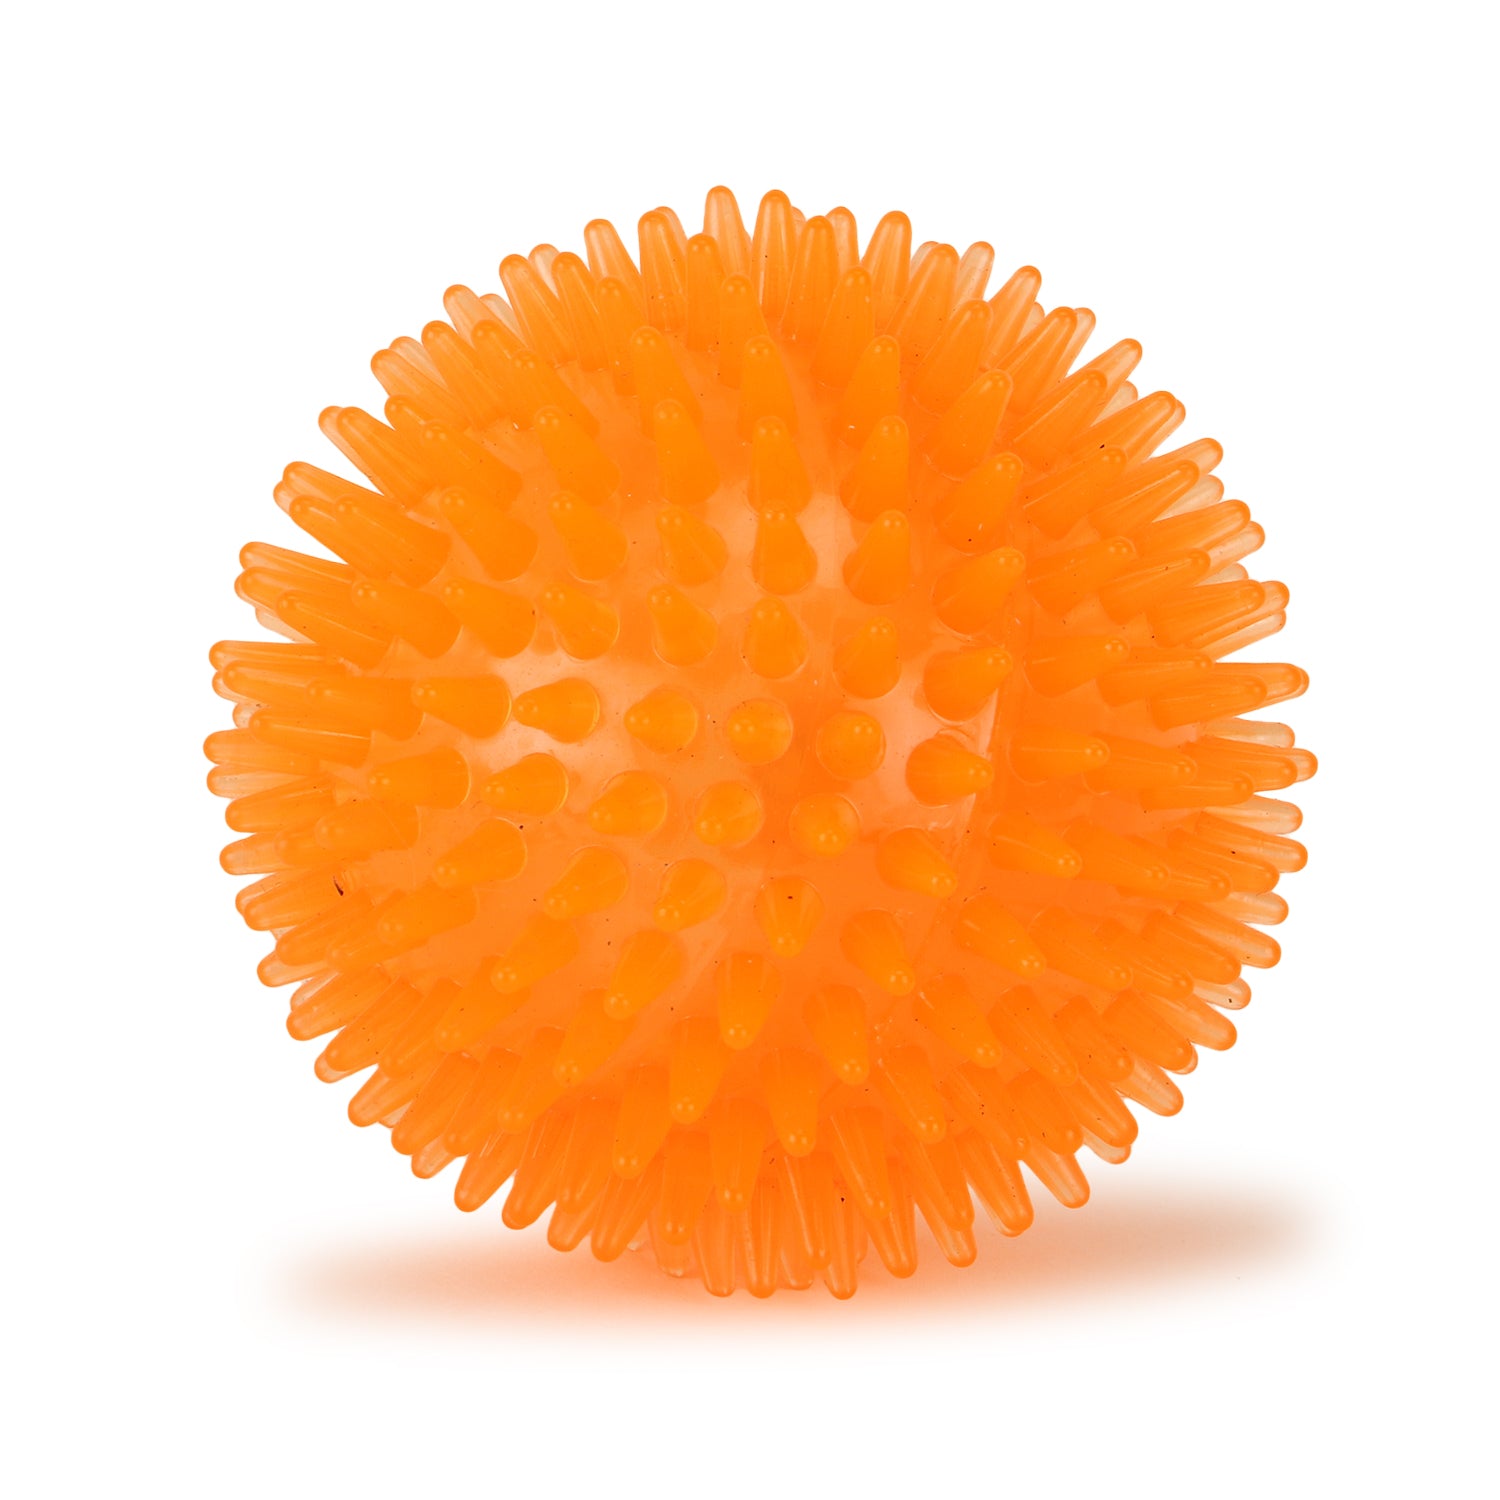 Basil TPR Squeaky Ball Orange